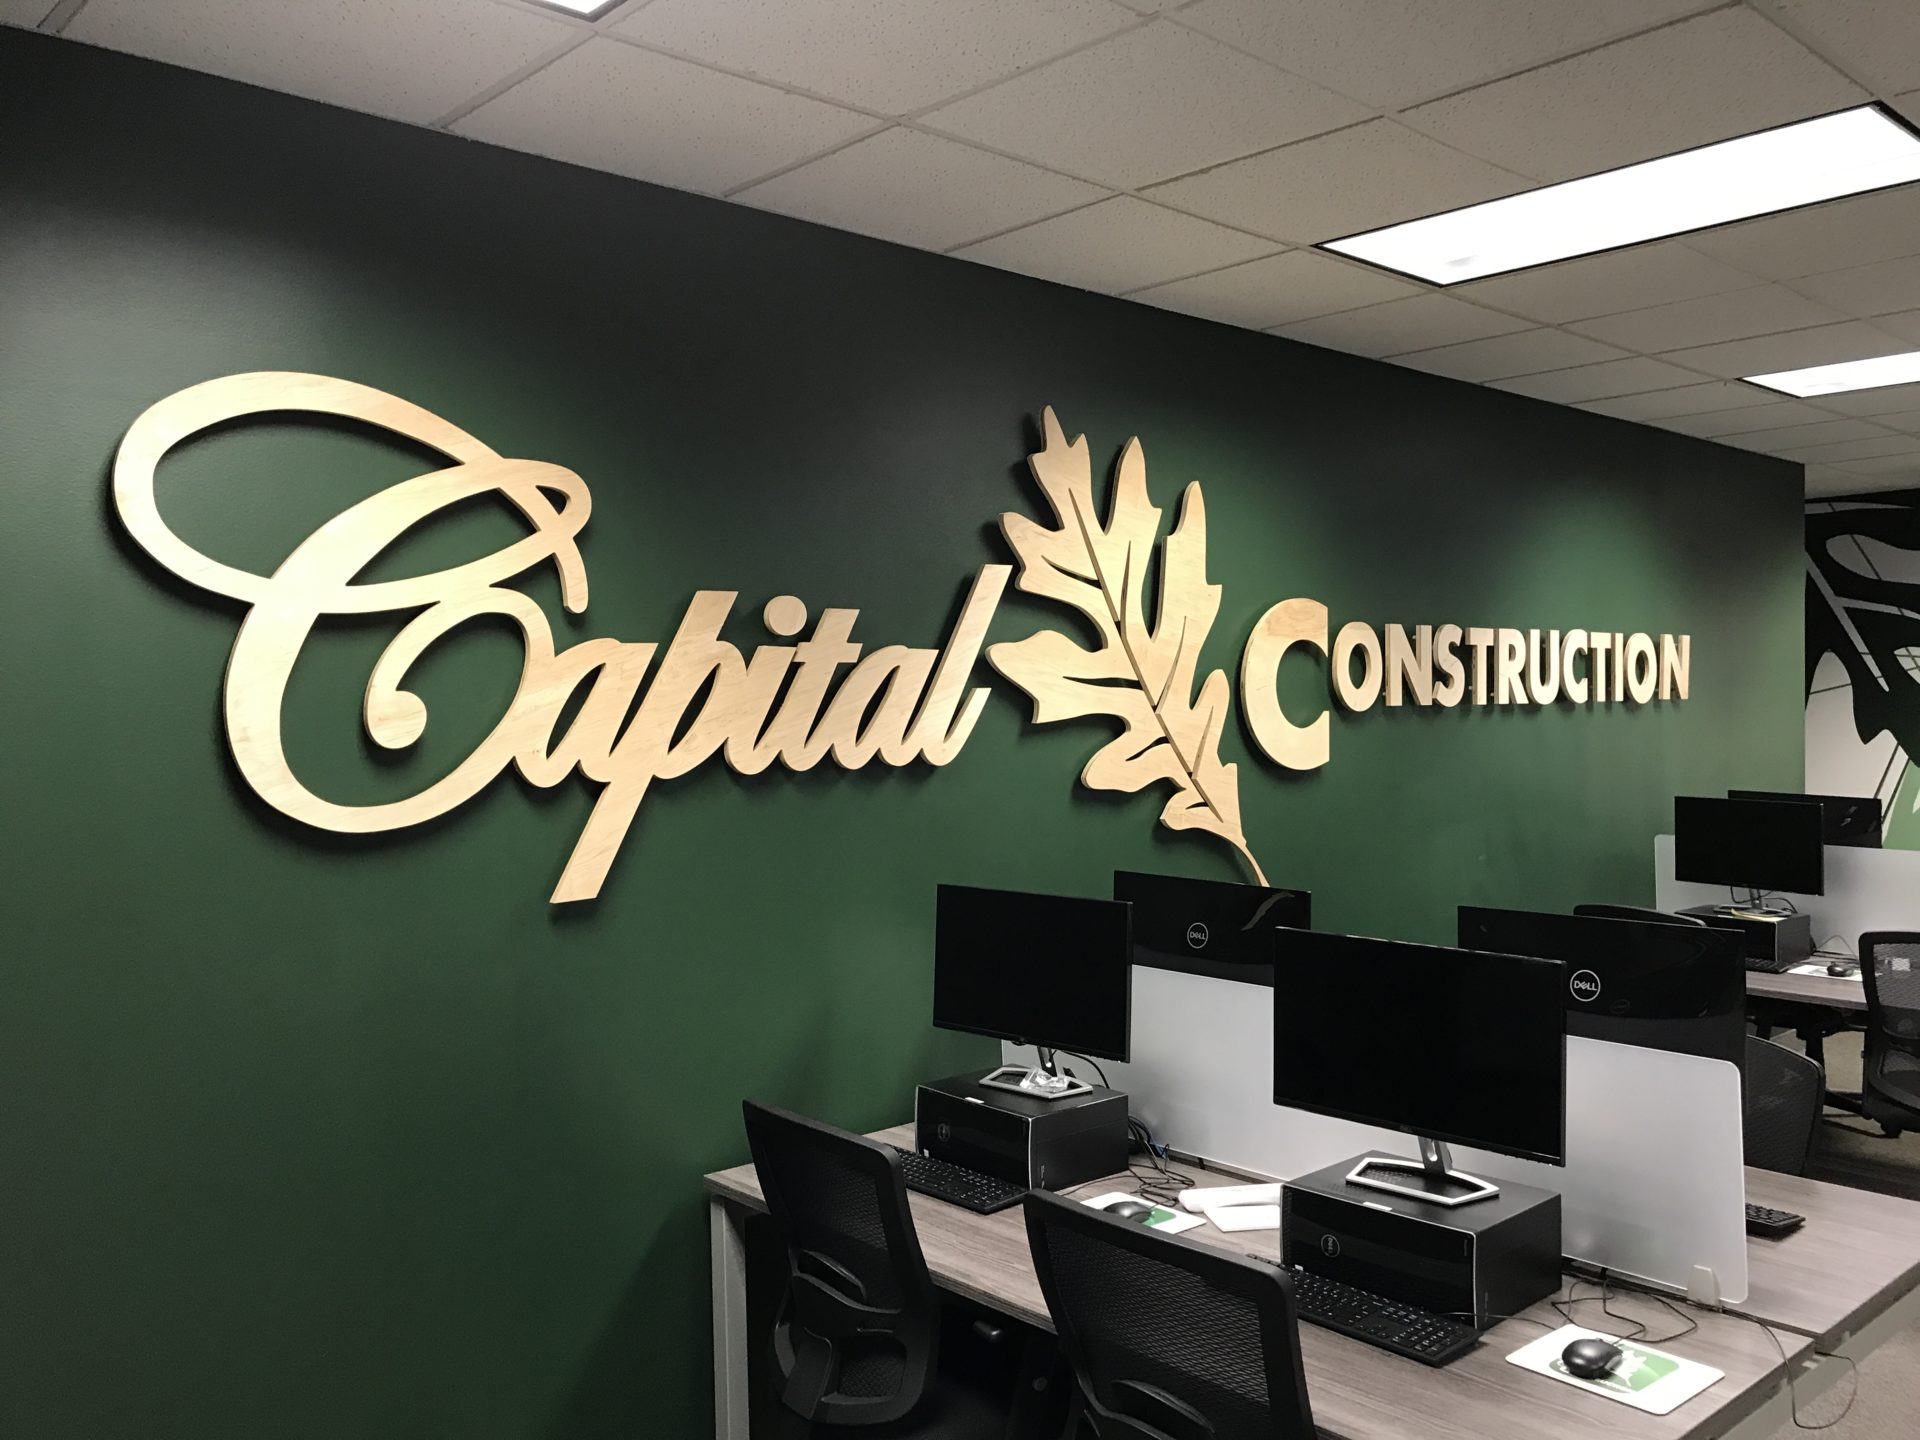 Capital Construction - Wood Lobby | Reception Signs